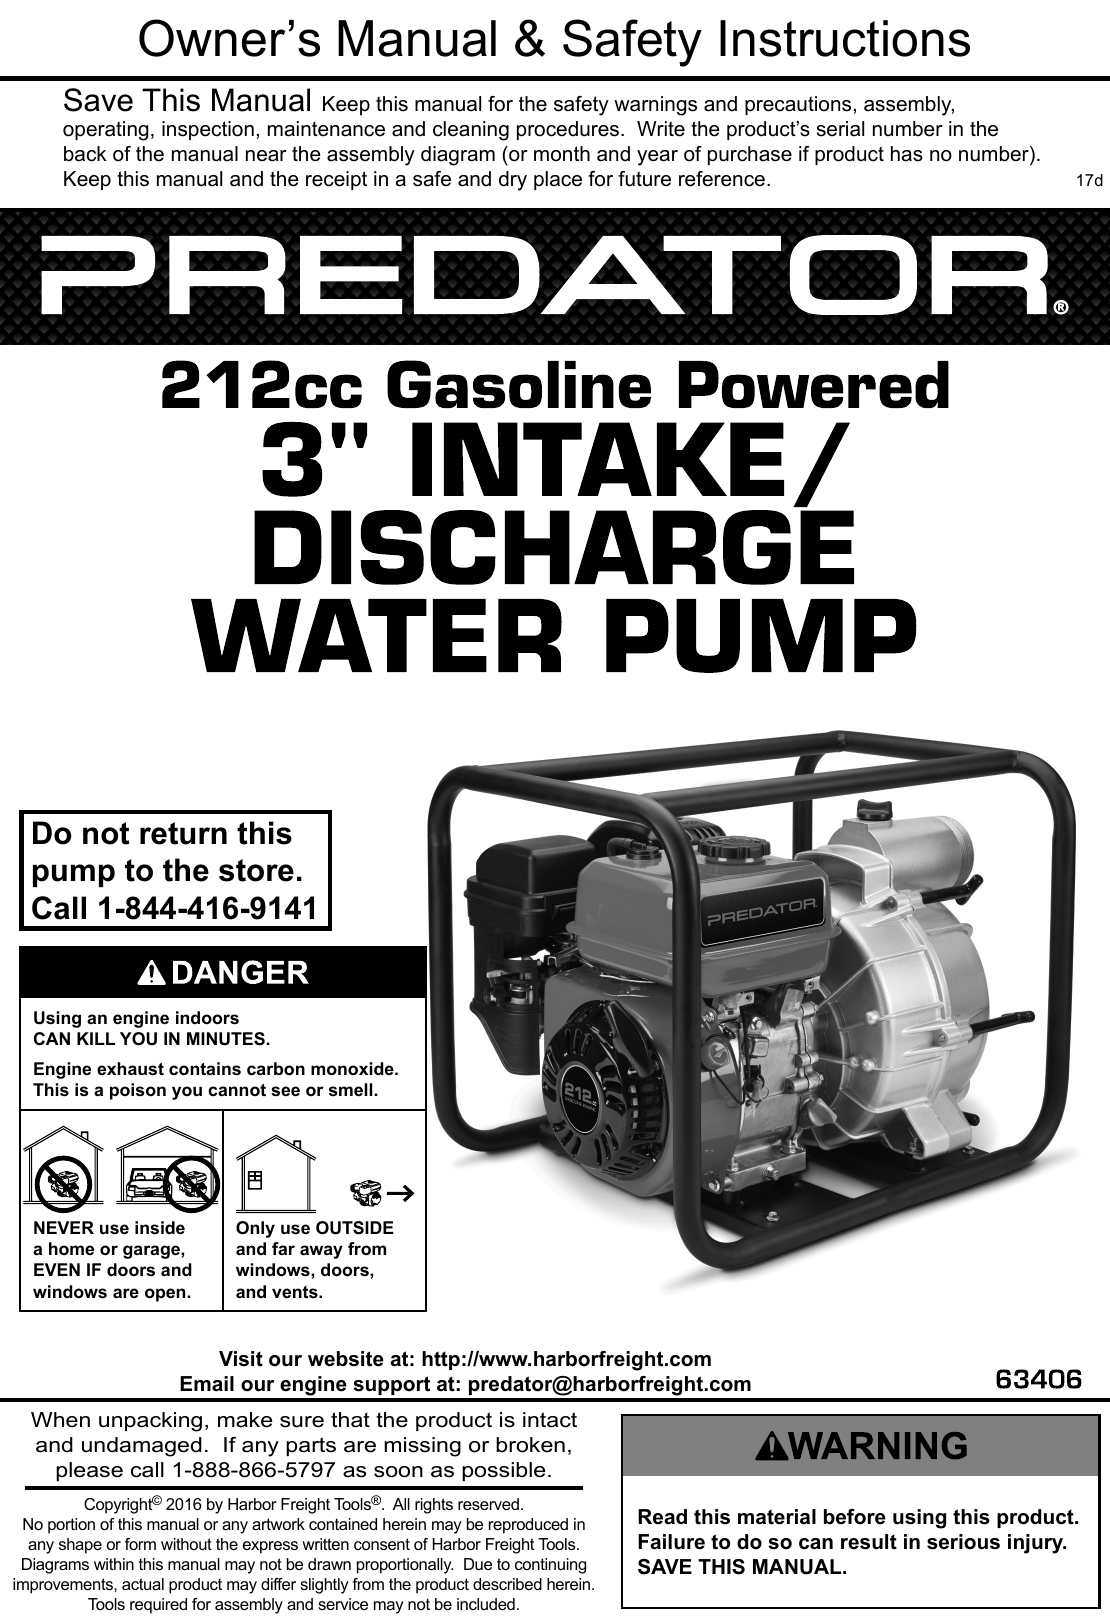 Water Drain Thread Plug and Seal For 3" 212cc Harbor Predator Water Pump 63406 